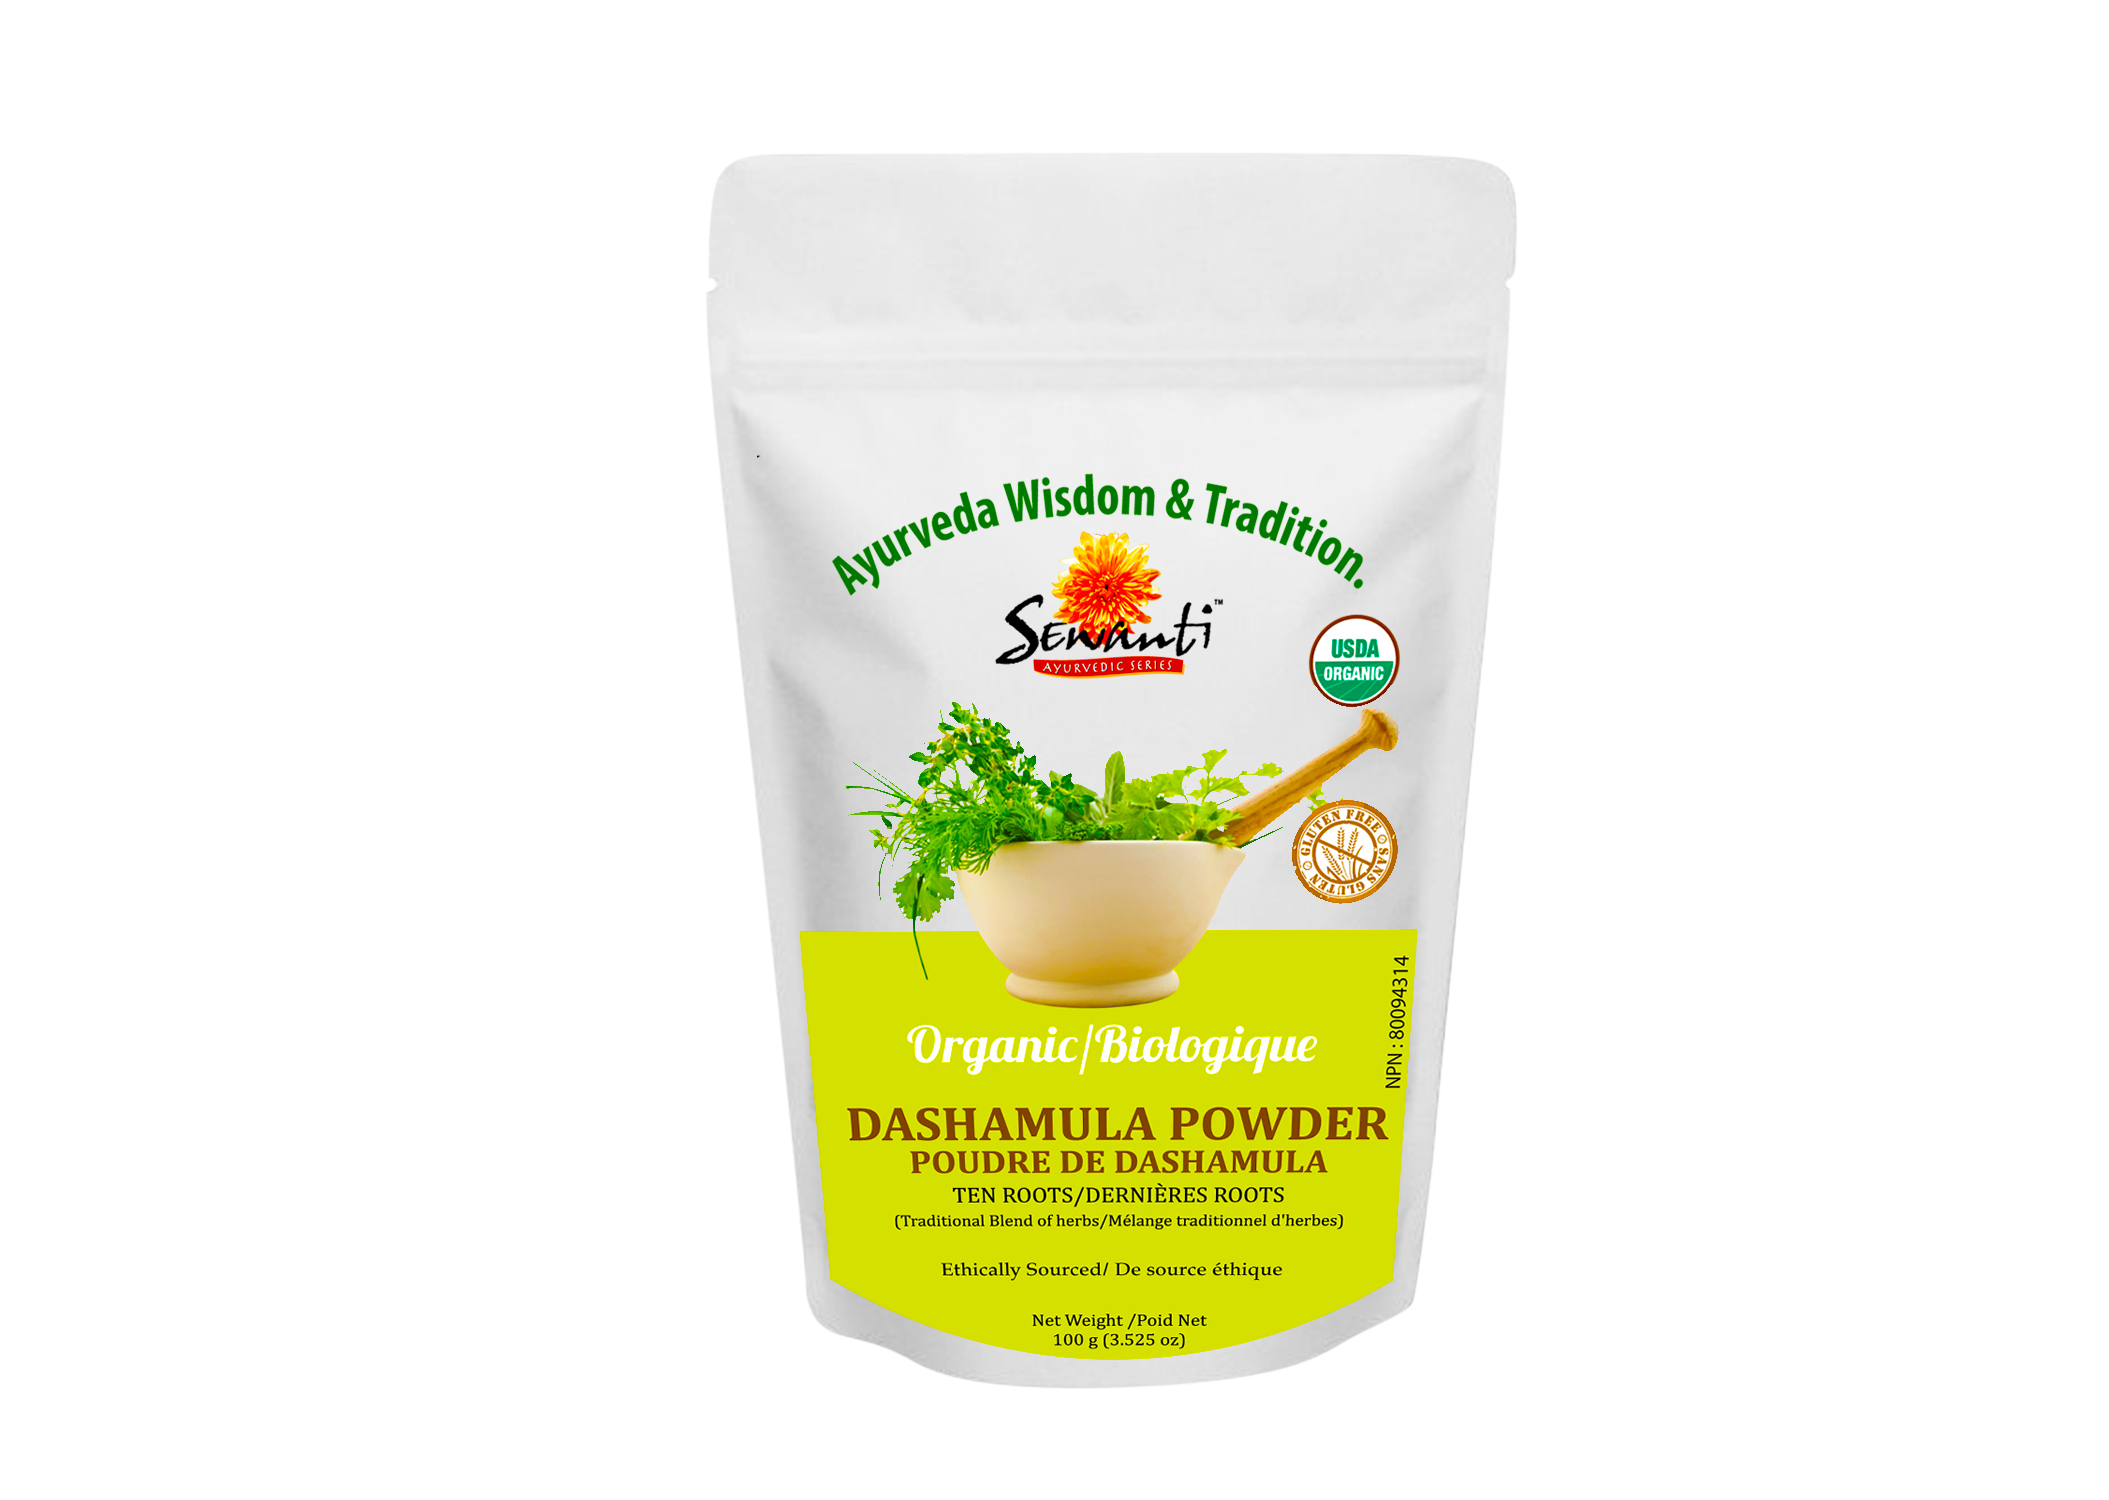 Organic Dashamula Powder - Dashamula powder is traditionally used in Ayurvedic Medicine/ Herbal medicine to balance excess Vata and pacify Kapha, strengthen and nourish body tissues.